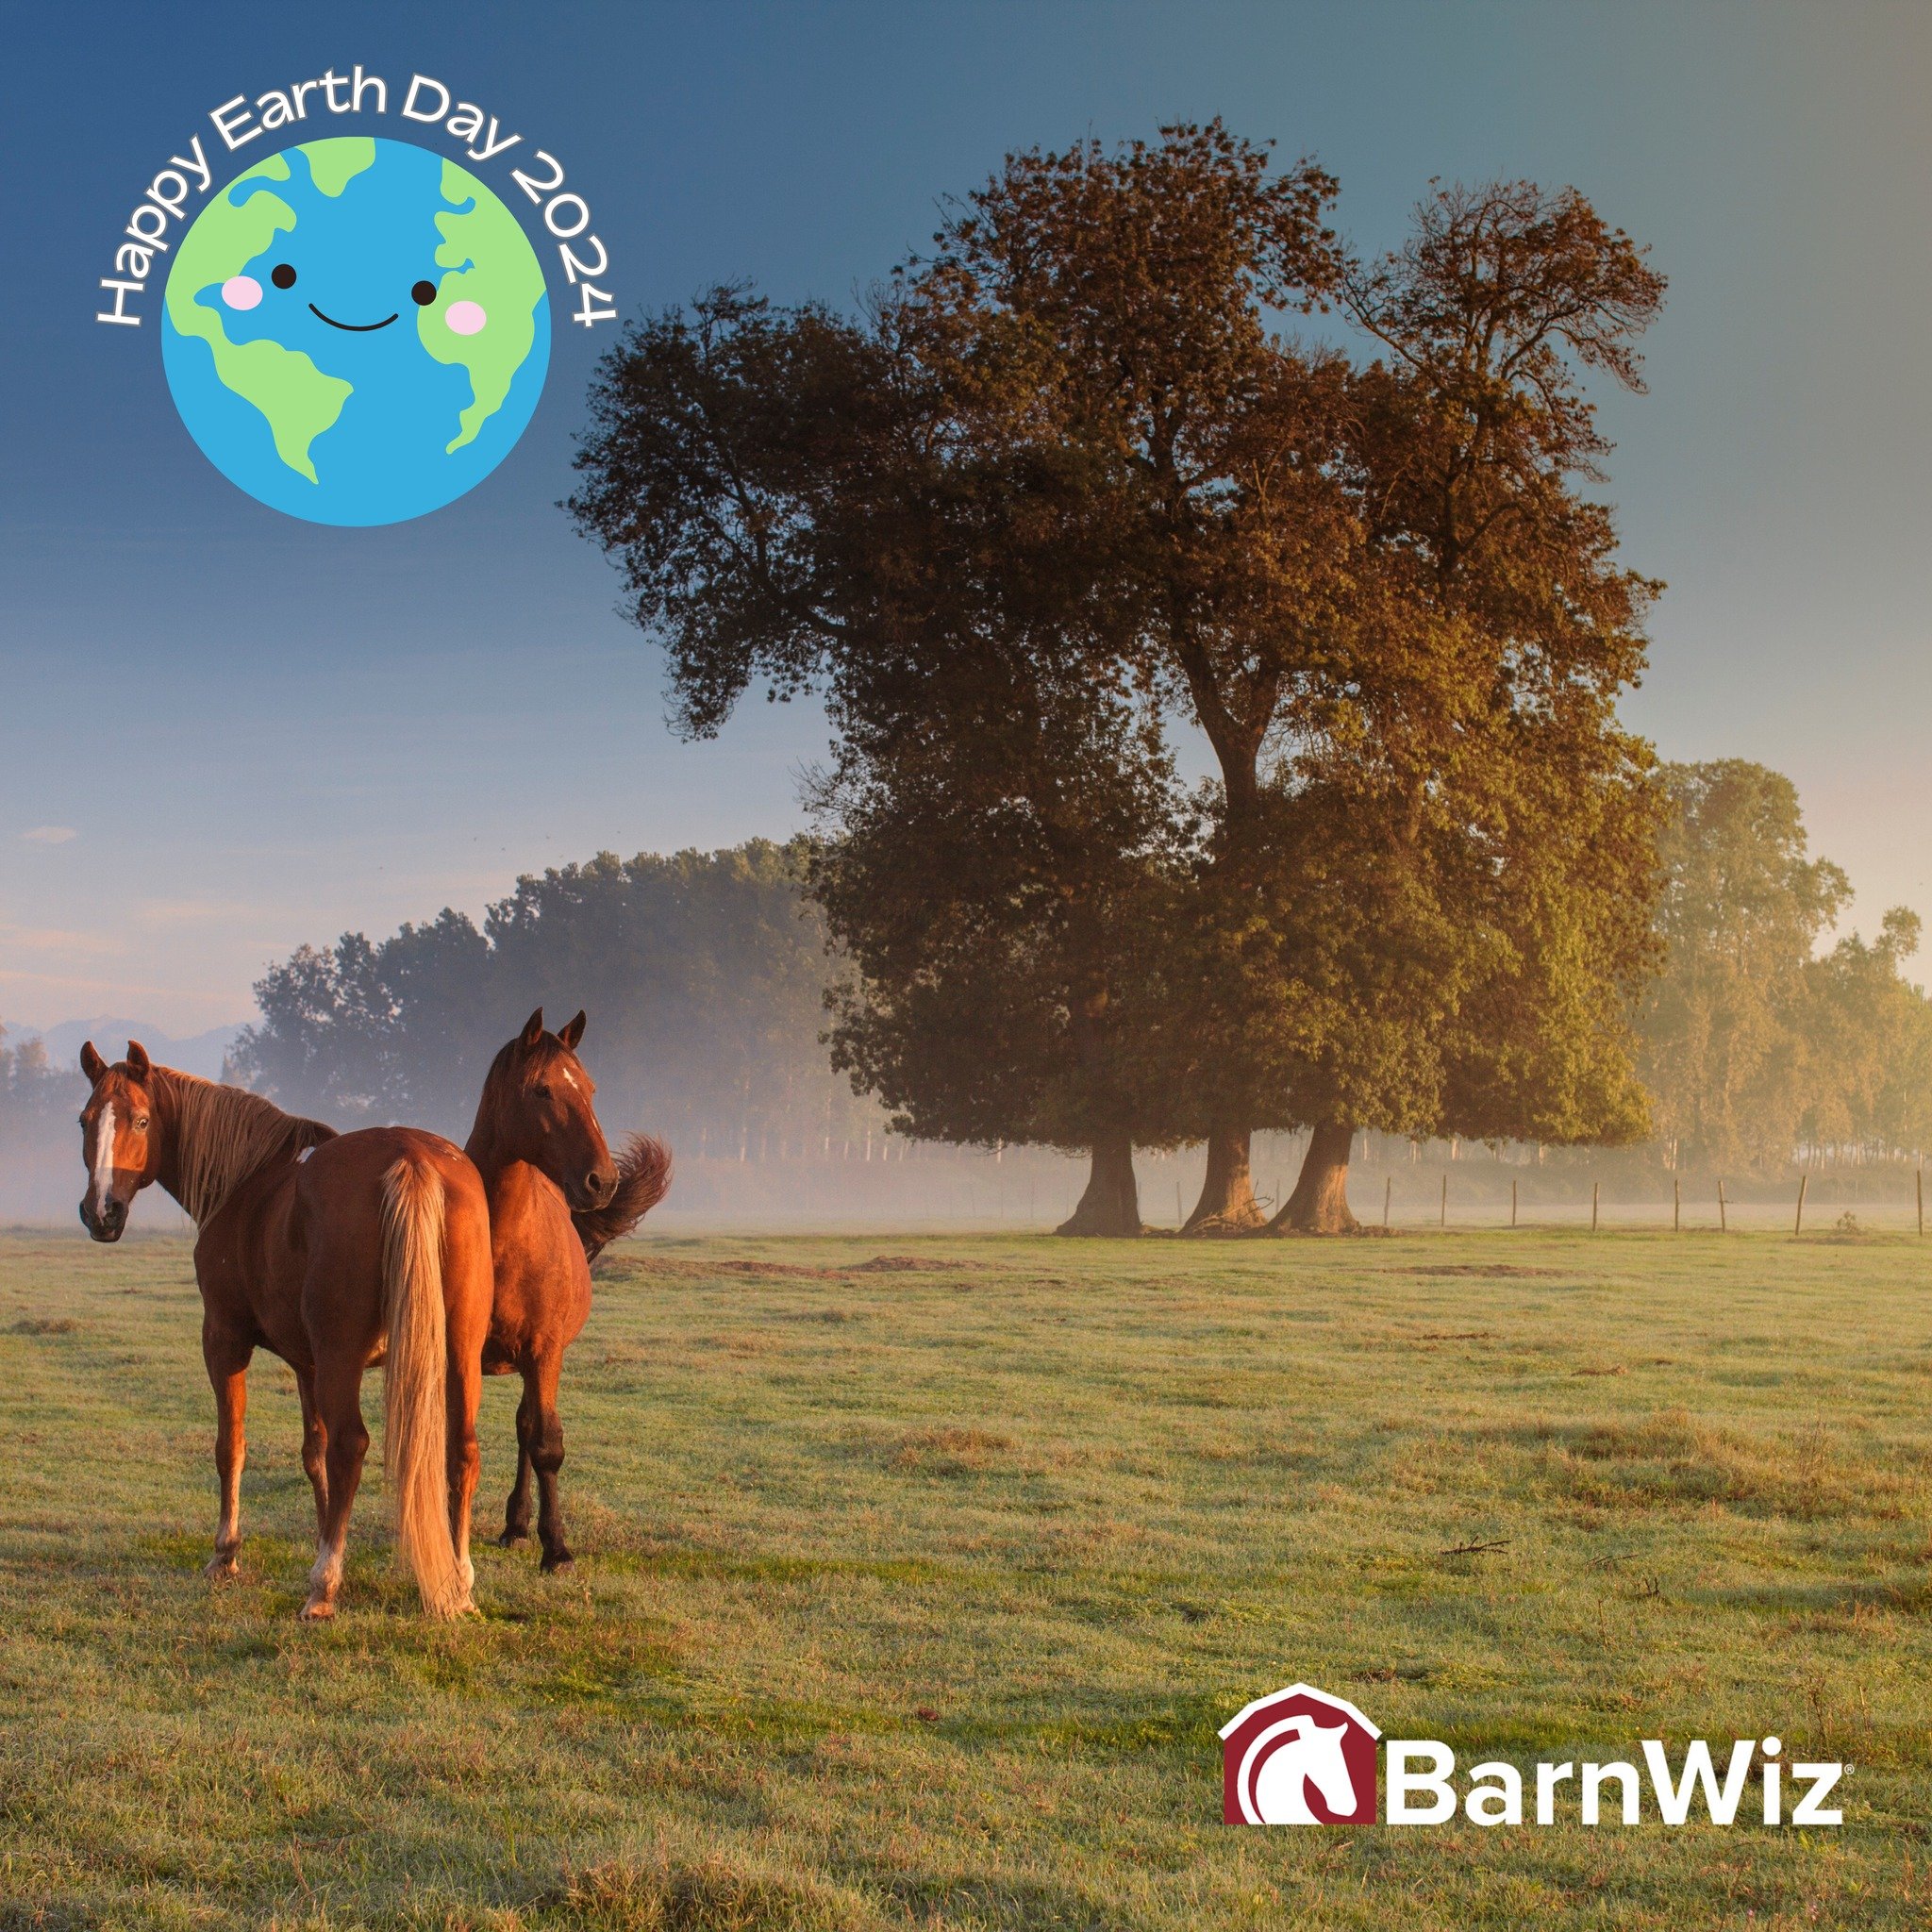 Happy Earth Day from BarnWiz!

#barnwiz #earthday #landpreservation #equestrian